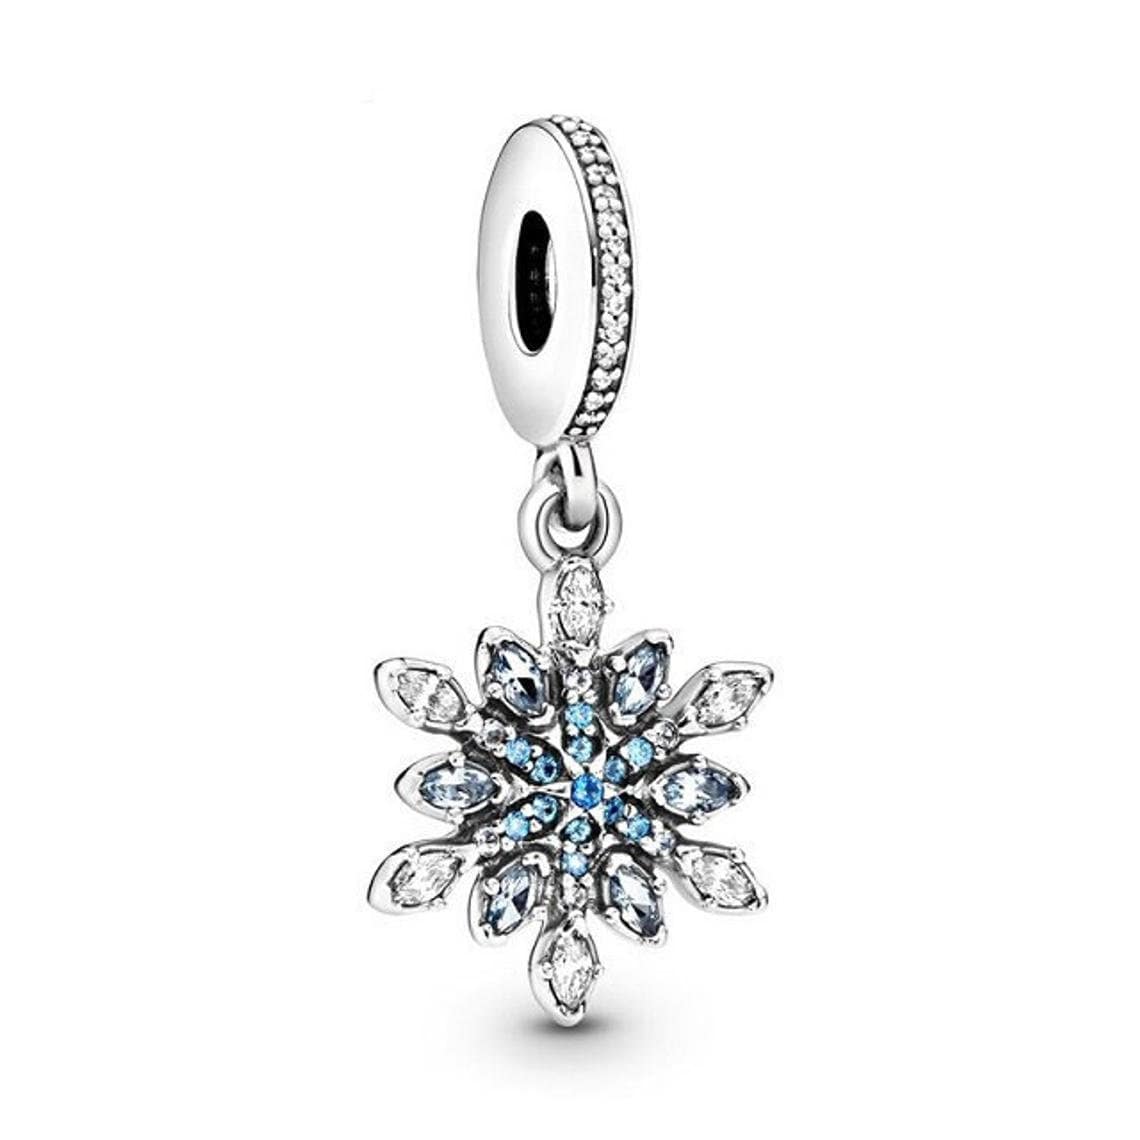 Snowflake Charms (5pcs) (13mm x 18mm / Tibetan Silver) Christmas Metal Findings Pendant Bracelet Earrings Zipper Pulls Keychains CHM290